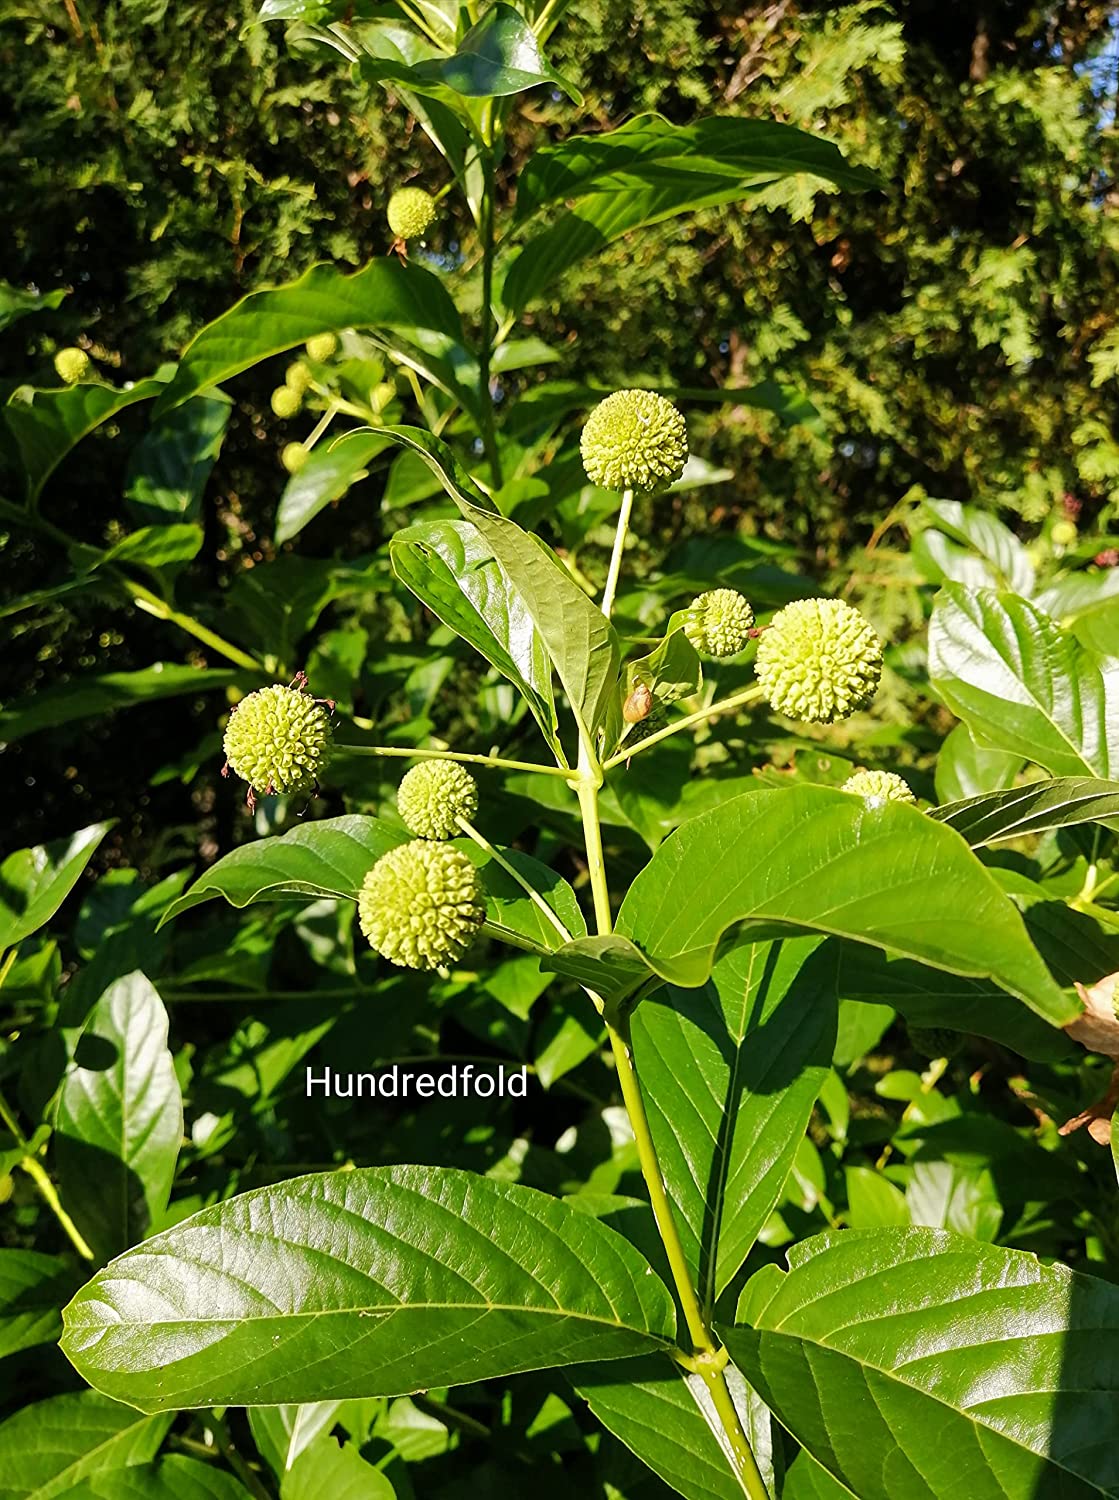 Hundredfold Button Bush Buttonbush 100 Seeds - Cephalanthus occidentalis Canada Native Bush, Spreading Shrub for Shade Garden, Rain Garden and Ponds